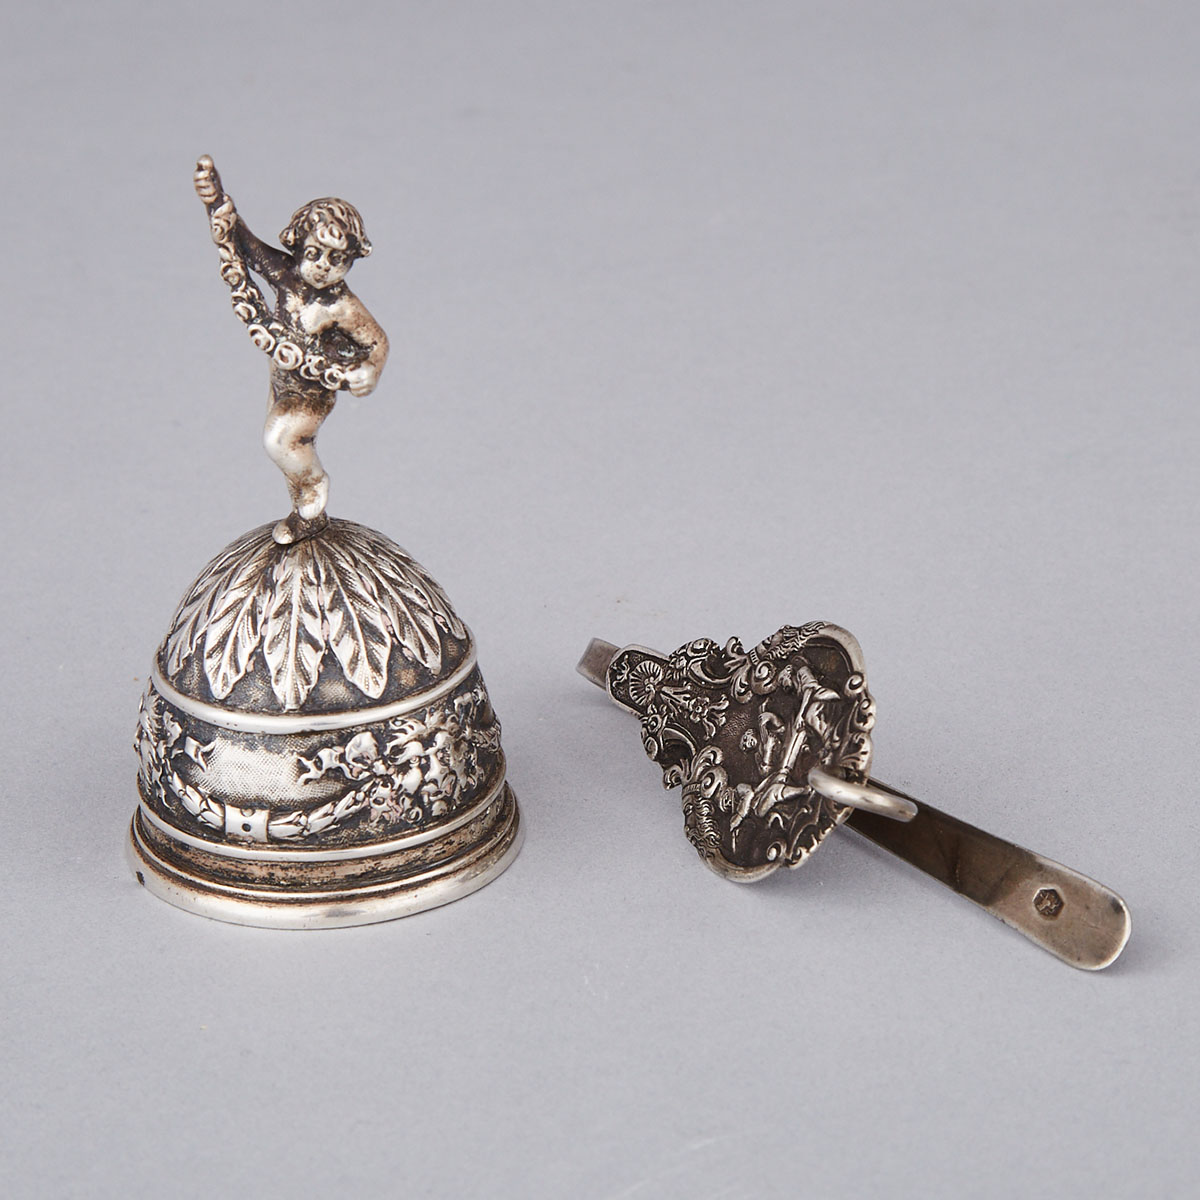 German Silver Table Bell, Storck & Sinsheimer, Hanau and a Dutch Chatelaine Hook, c.1900